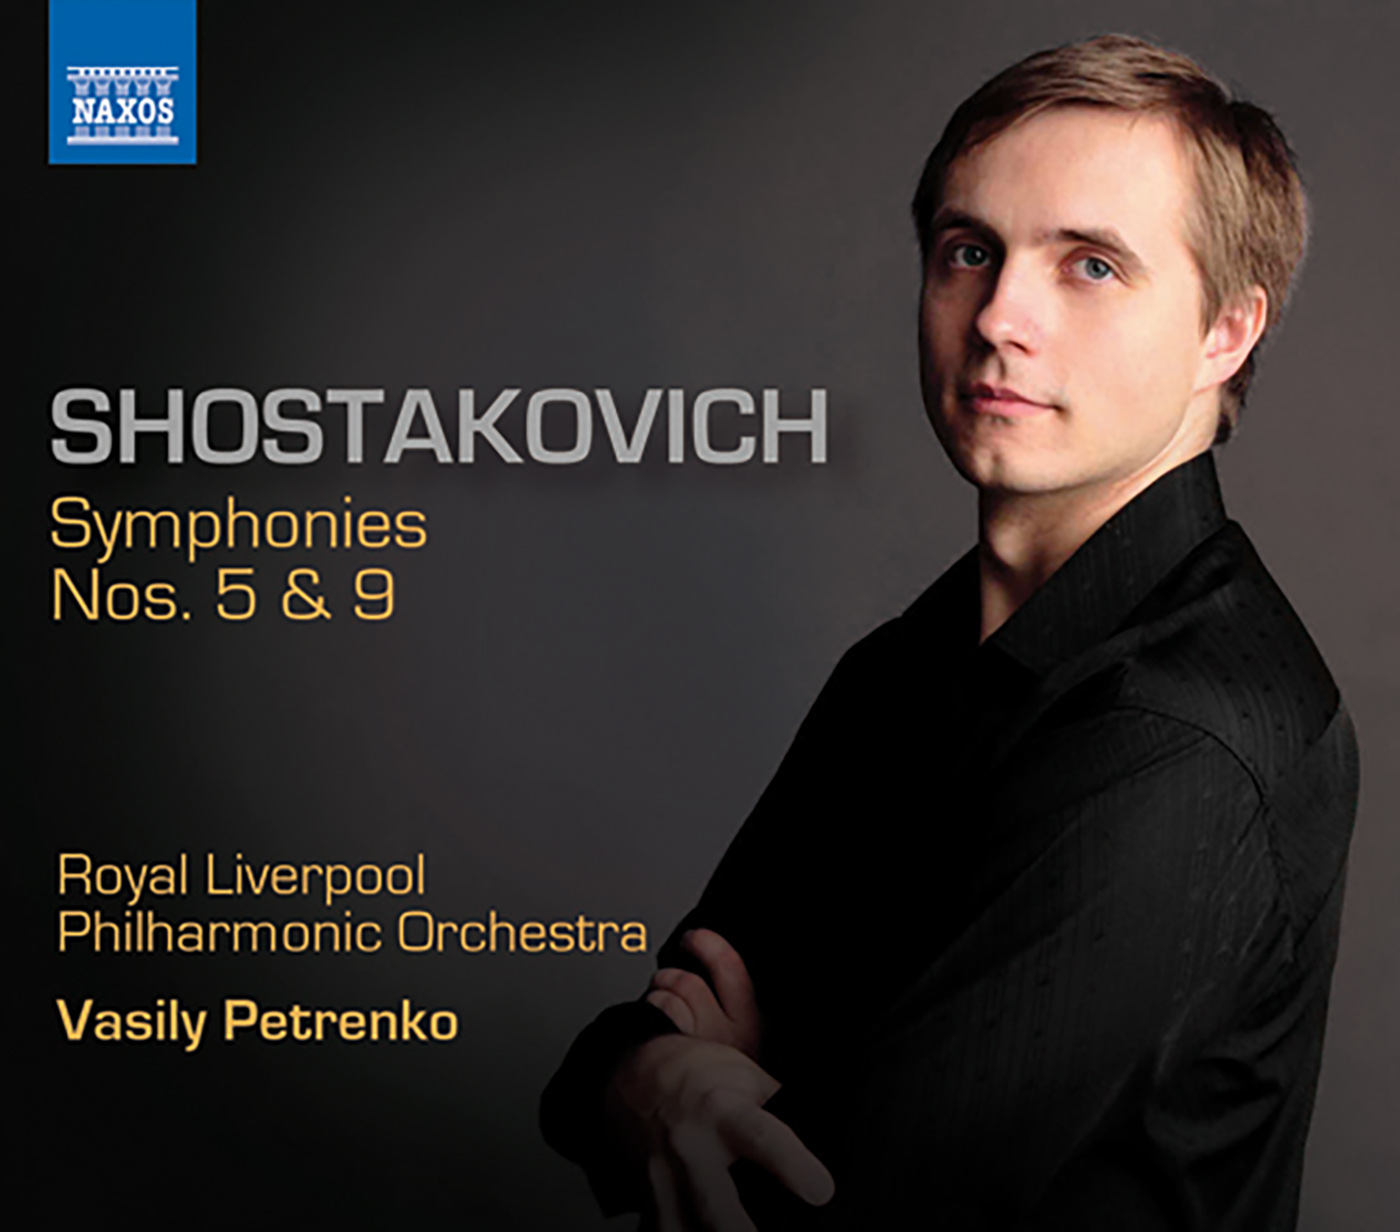 SHOSTAKOVICH, D.: Symphonies, Vol.  2 - Symphonies Nos. 5 and 9 (Royal Liverpool Philharmonic, V. Petrenko)